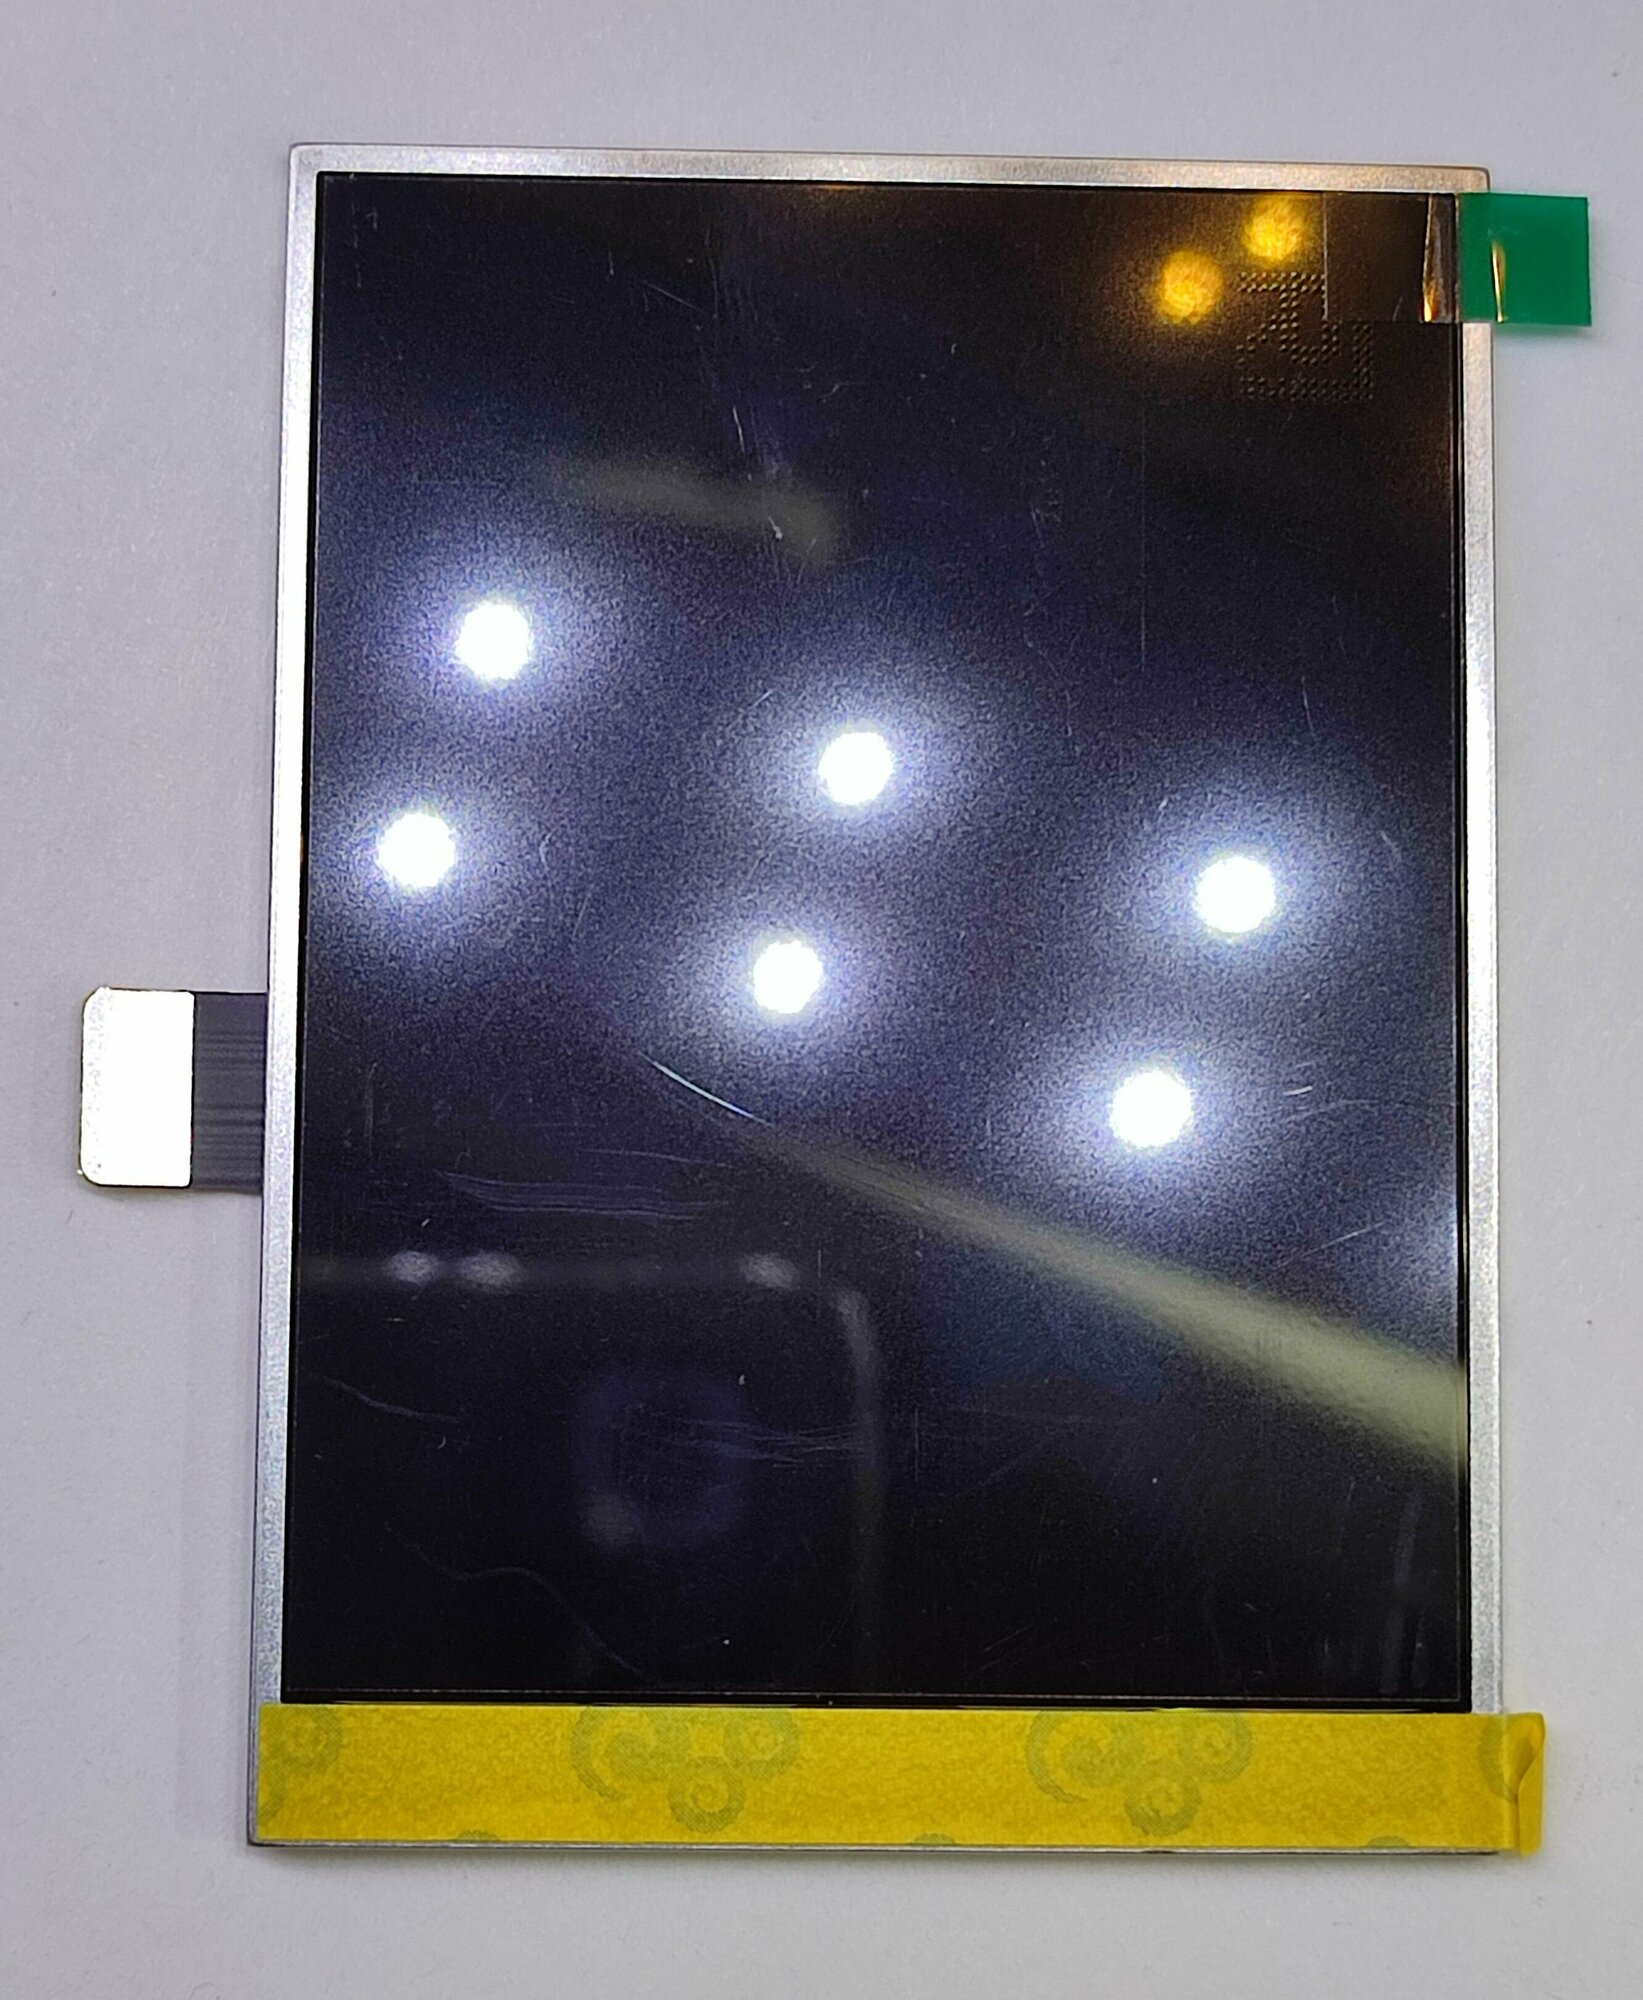 Дисплей (экран) для HTC a3333 wildfire s